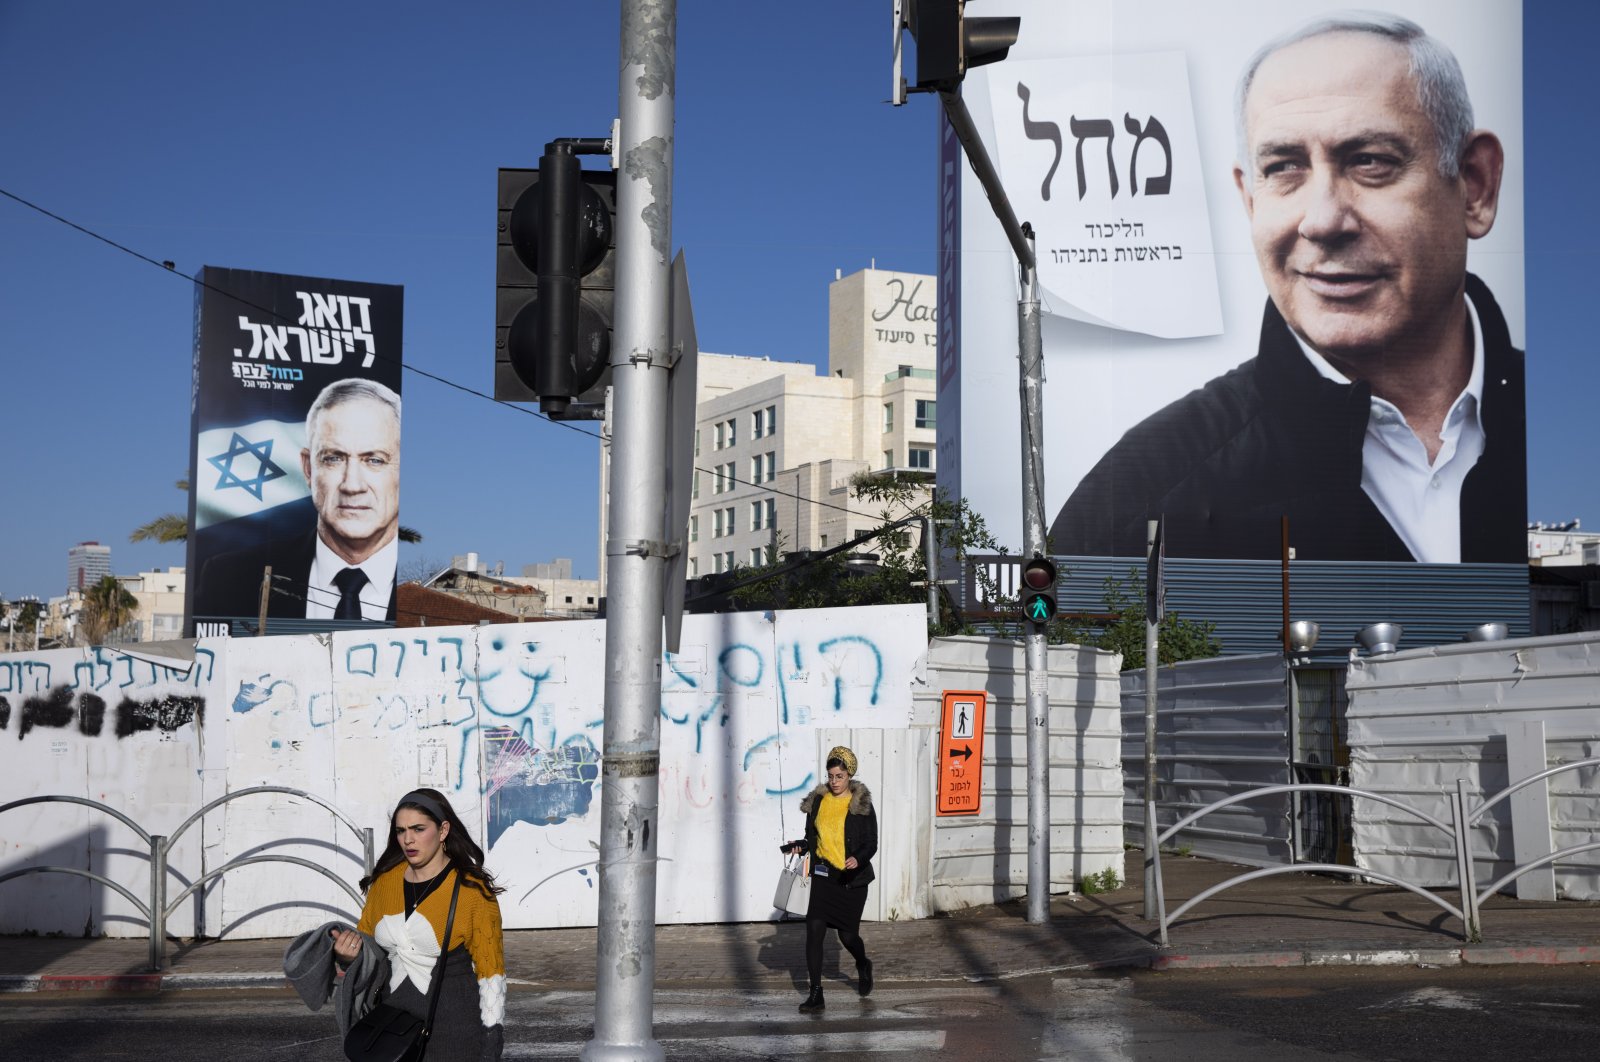 People walk next to election campaign billboards showing Israeli Prime Minister Benjamin Netanyahu (R) and Benny Gantz (L), Bnei Brak, March 1, 2020. (AP Photo)